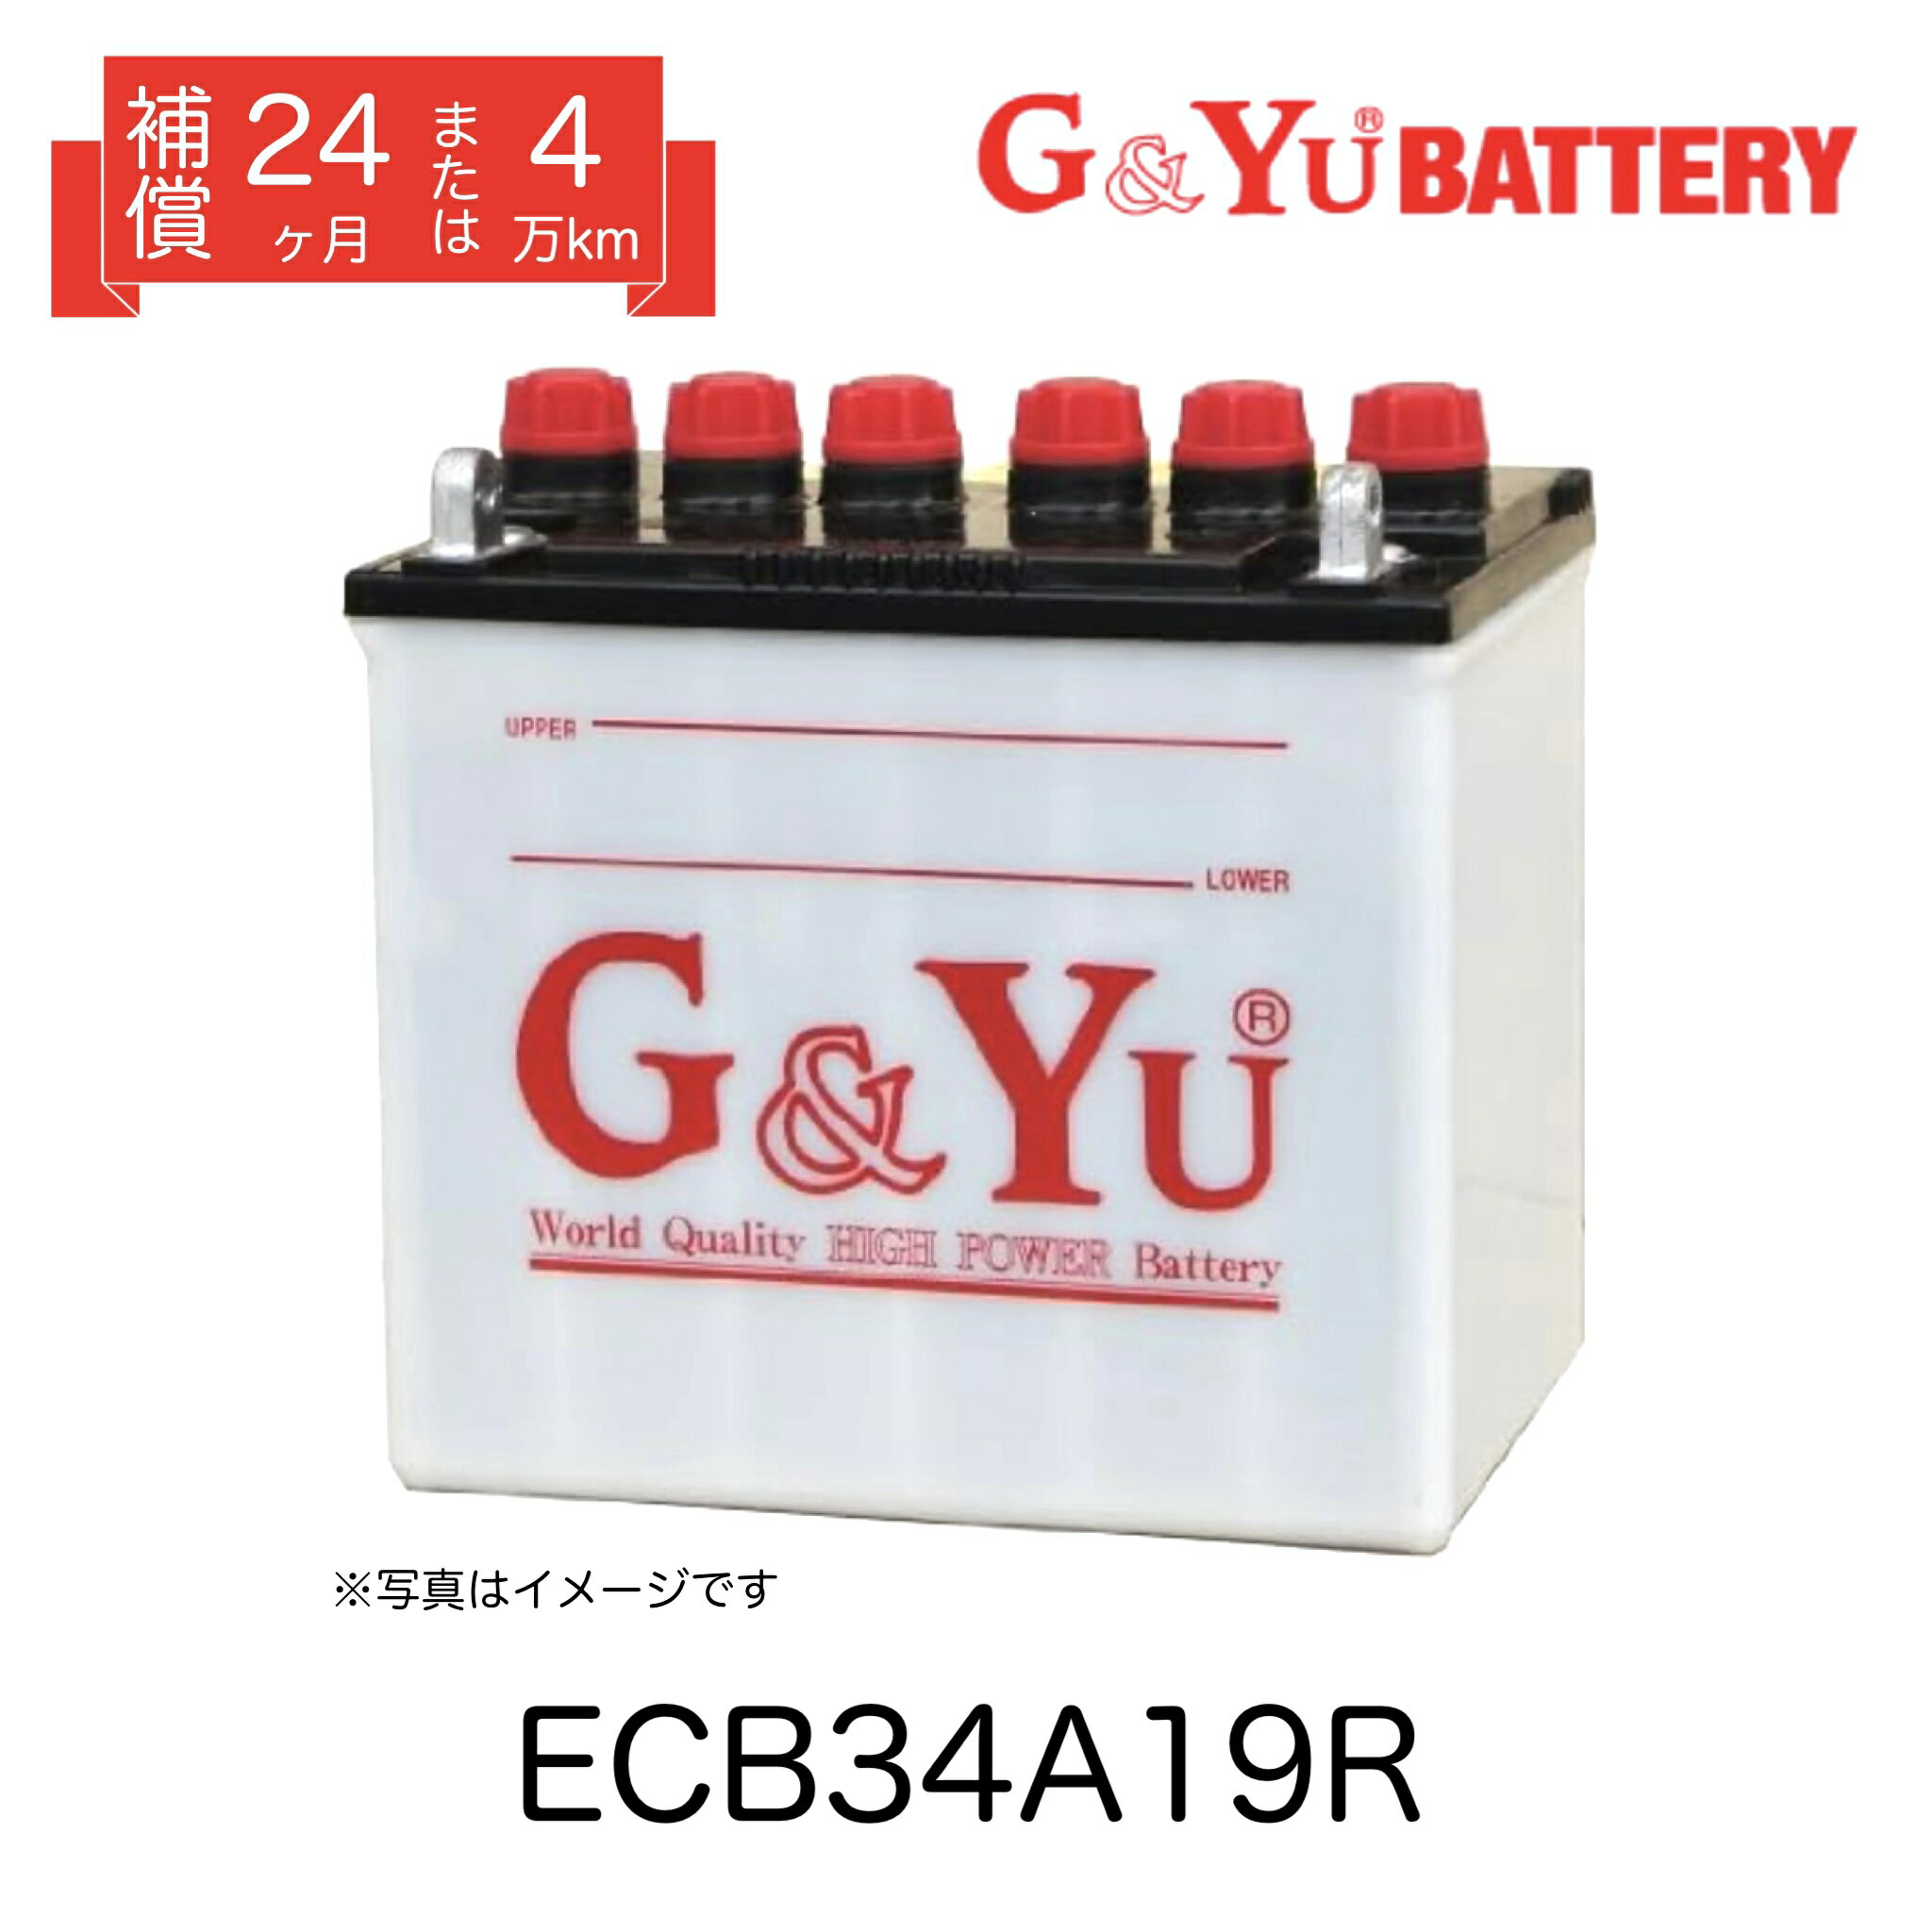 G&Yu ジーアンドユー ECOBA エコバ カーバッテリー バッテリー 凹凸キャップボルトナット締め端子 ECB34A19R 34A19R 12V 24か月または4万キロ補償